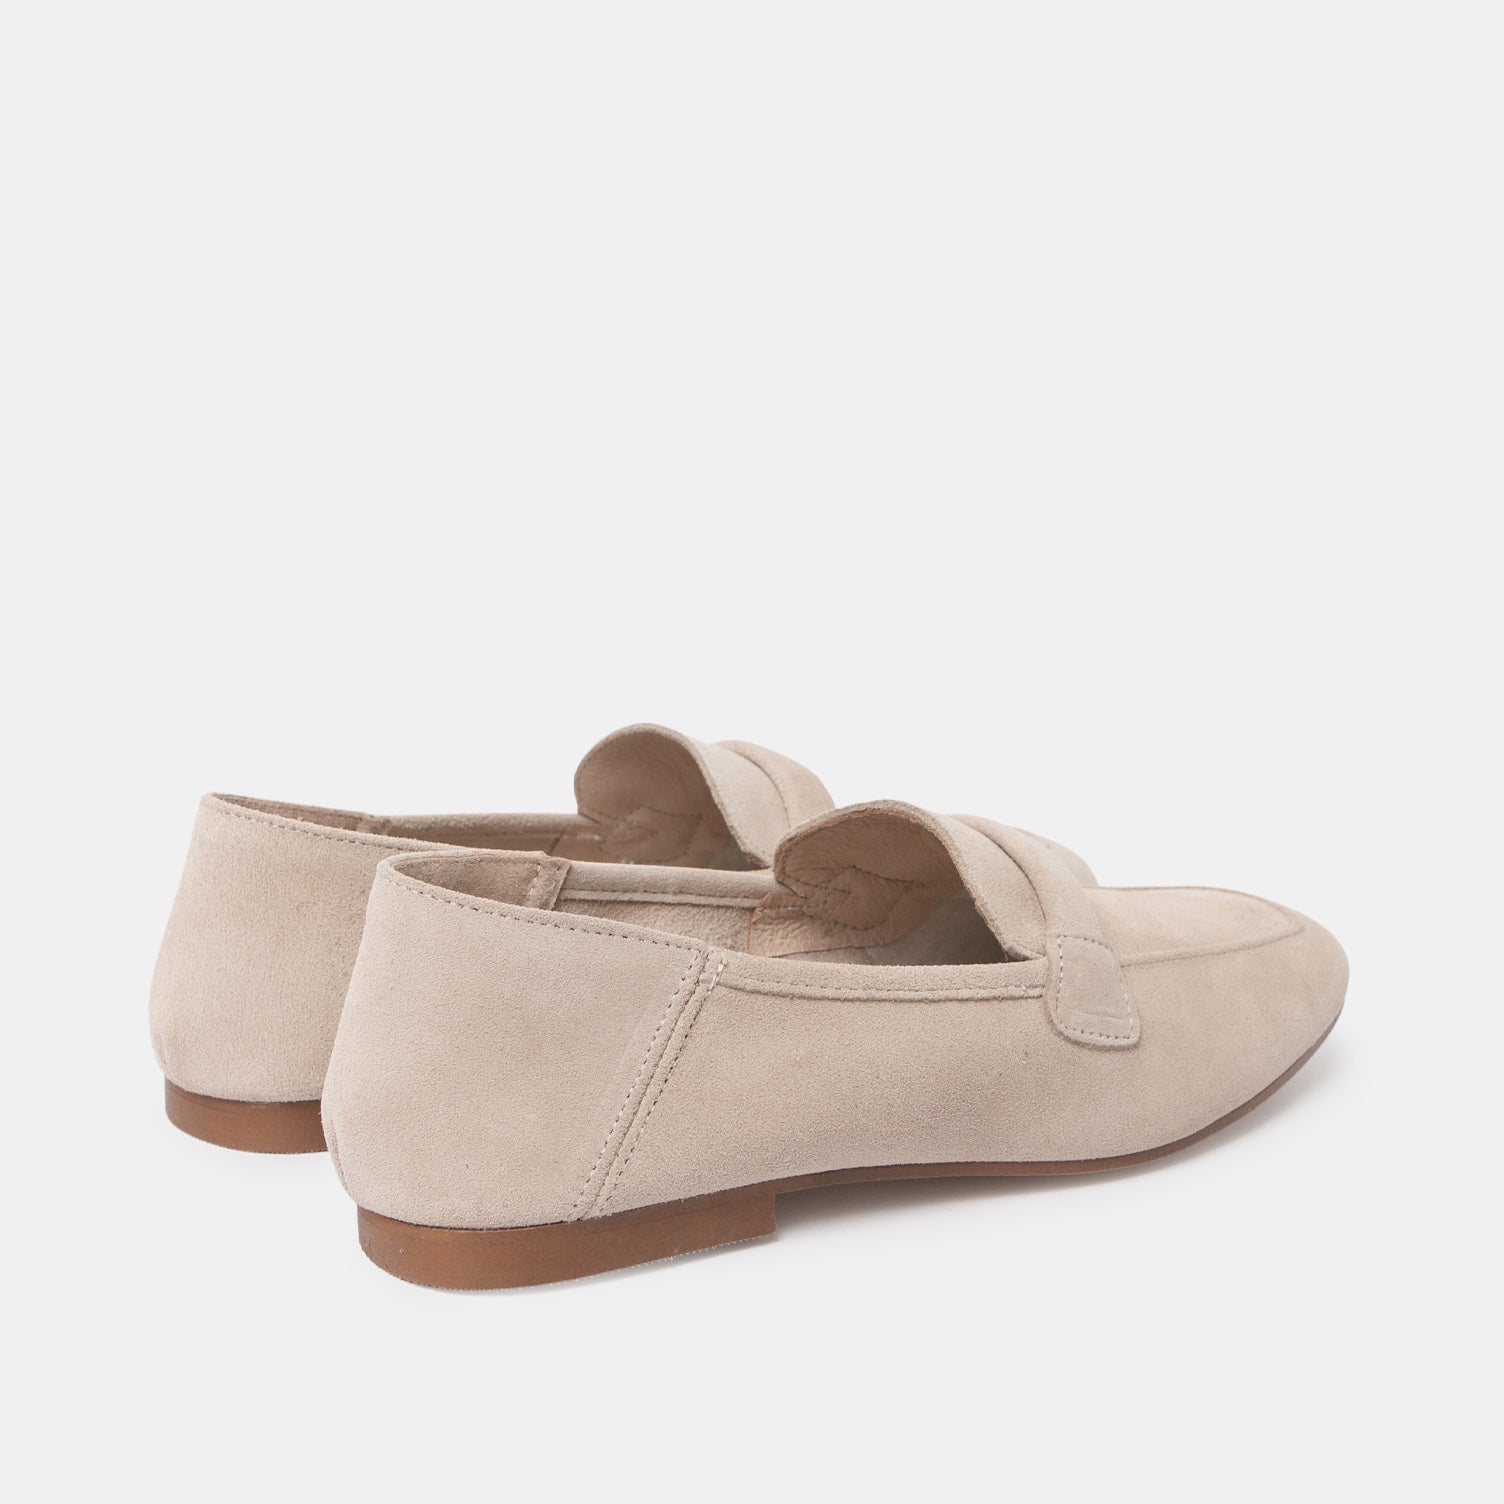 Loafer One-ann Shoe | New -Suede Lavender Blue- ann kurz